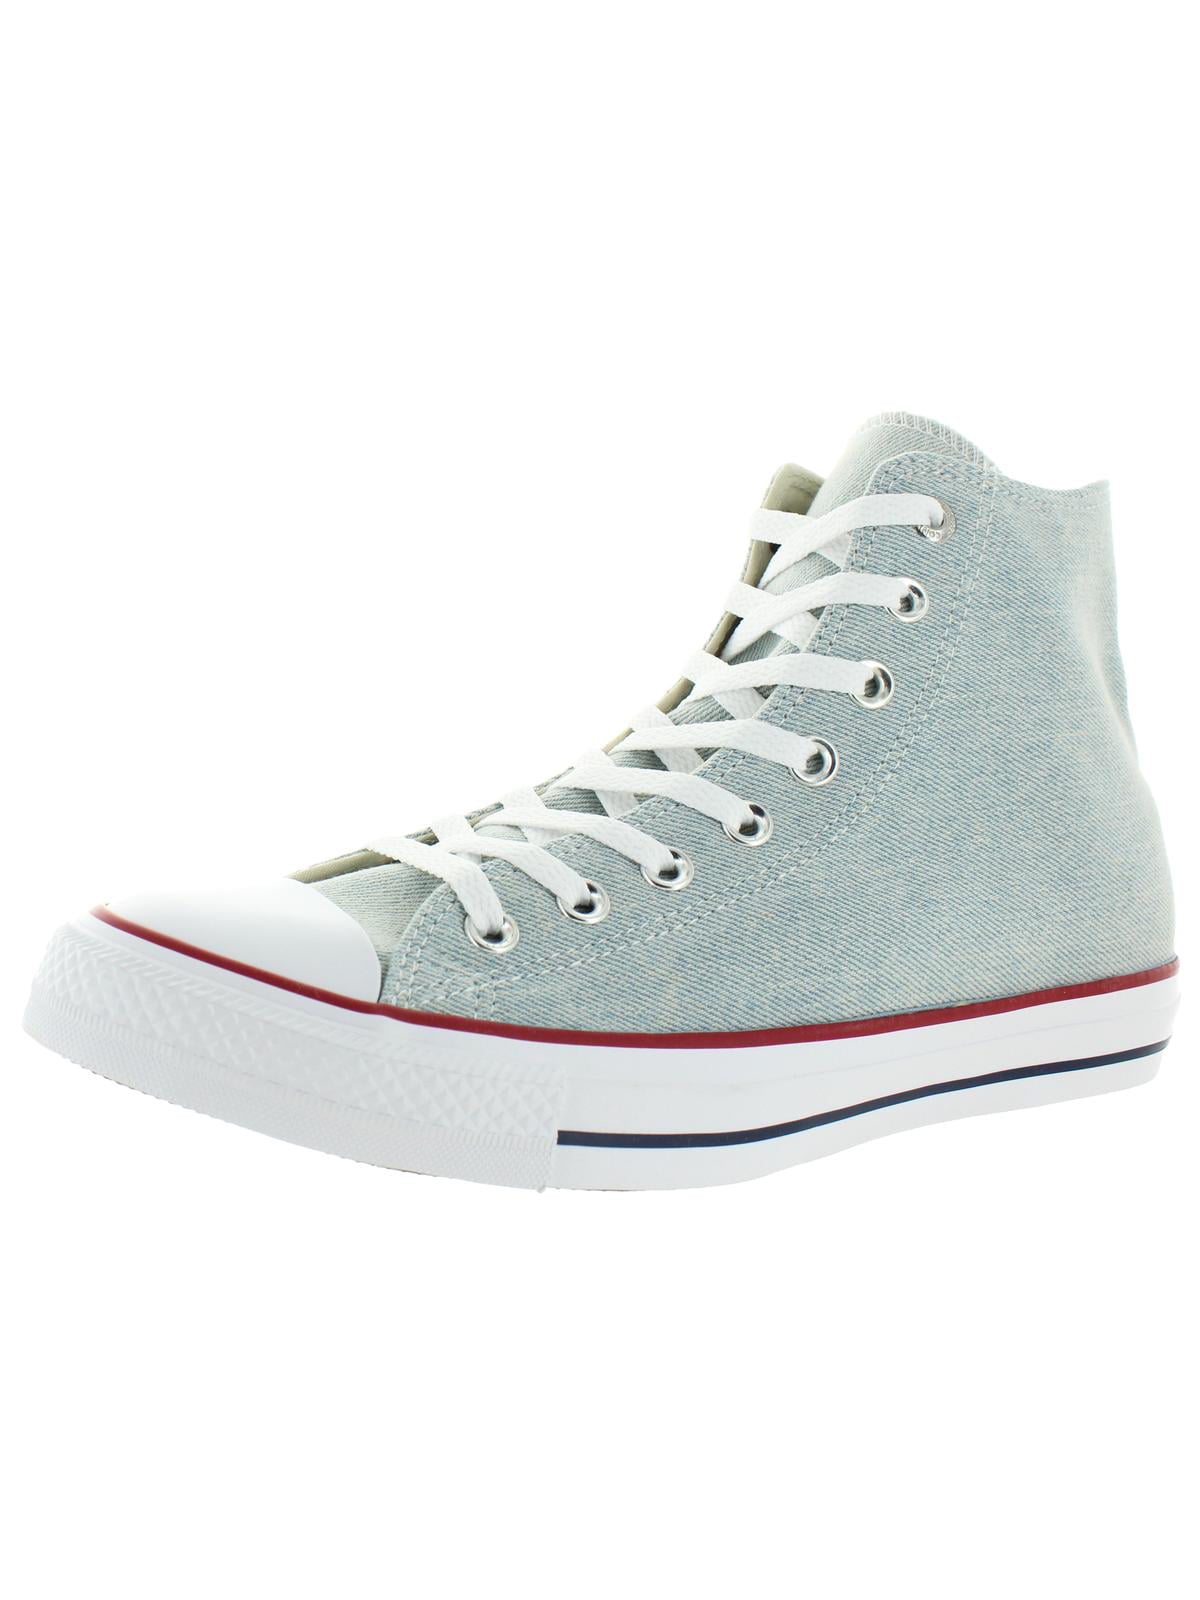 Converse Chuck Taylor All Star Hi Unisex Shoes Light Blue-White-Brown  161491c 